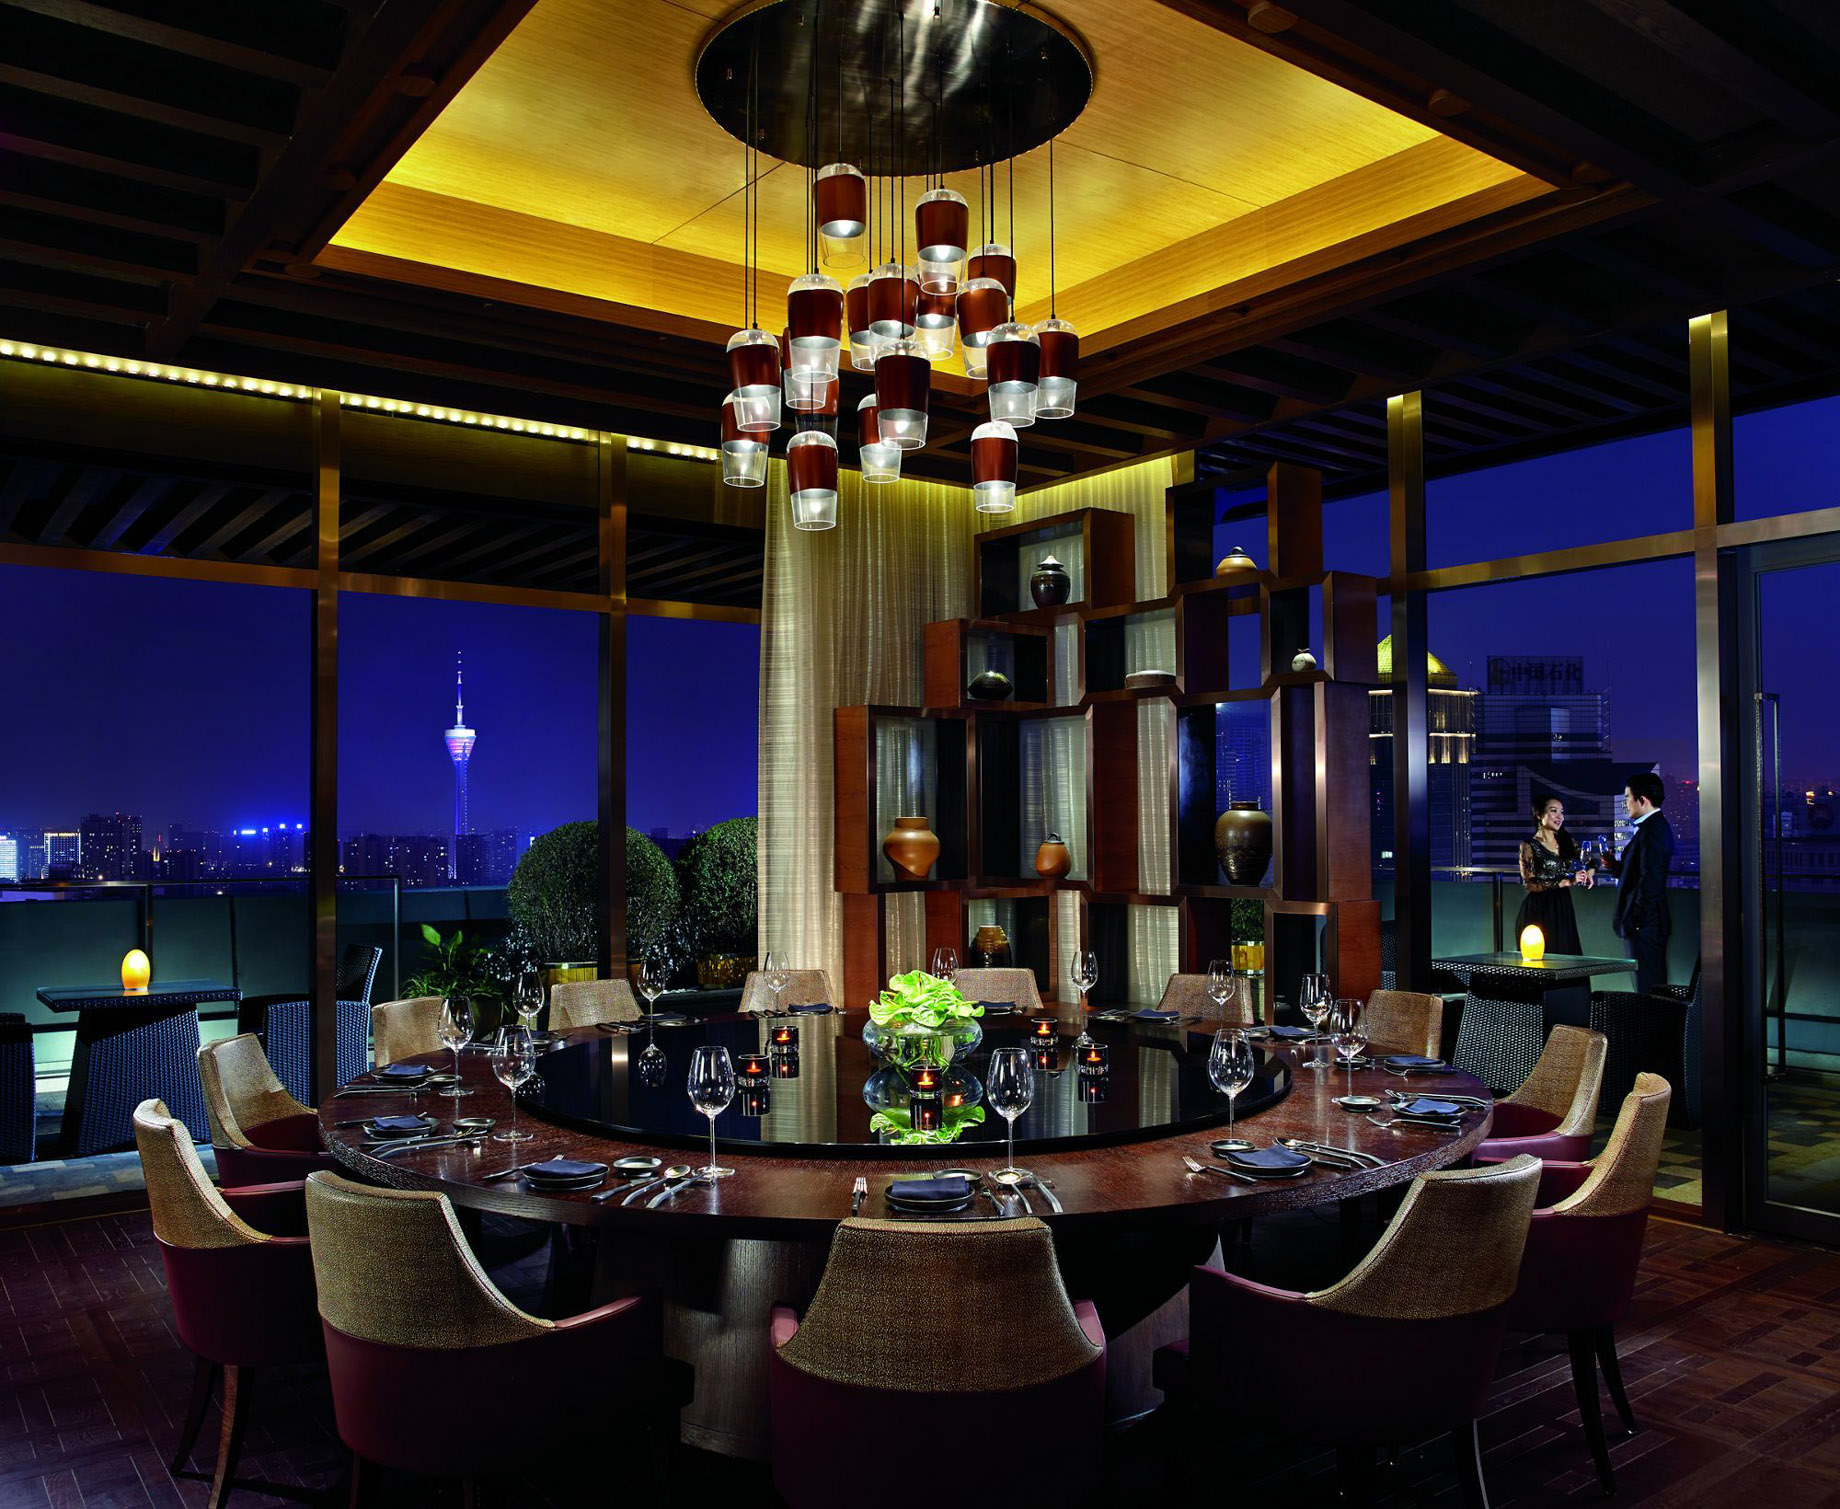 The Ritz-Carlton, Chengdu Hotel - Chengdu, Sichuan, China - Flair Lounge Table